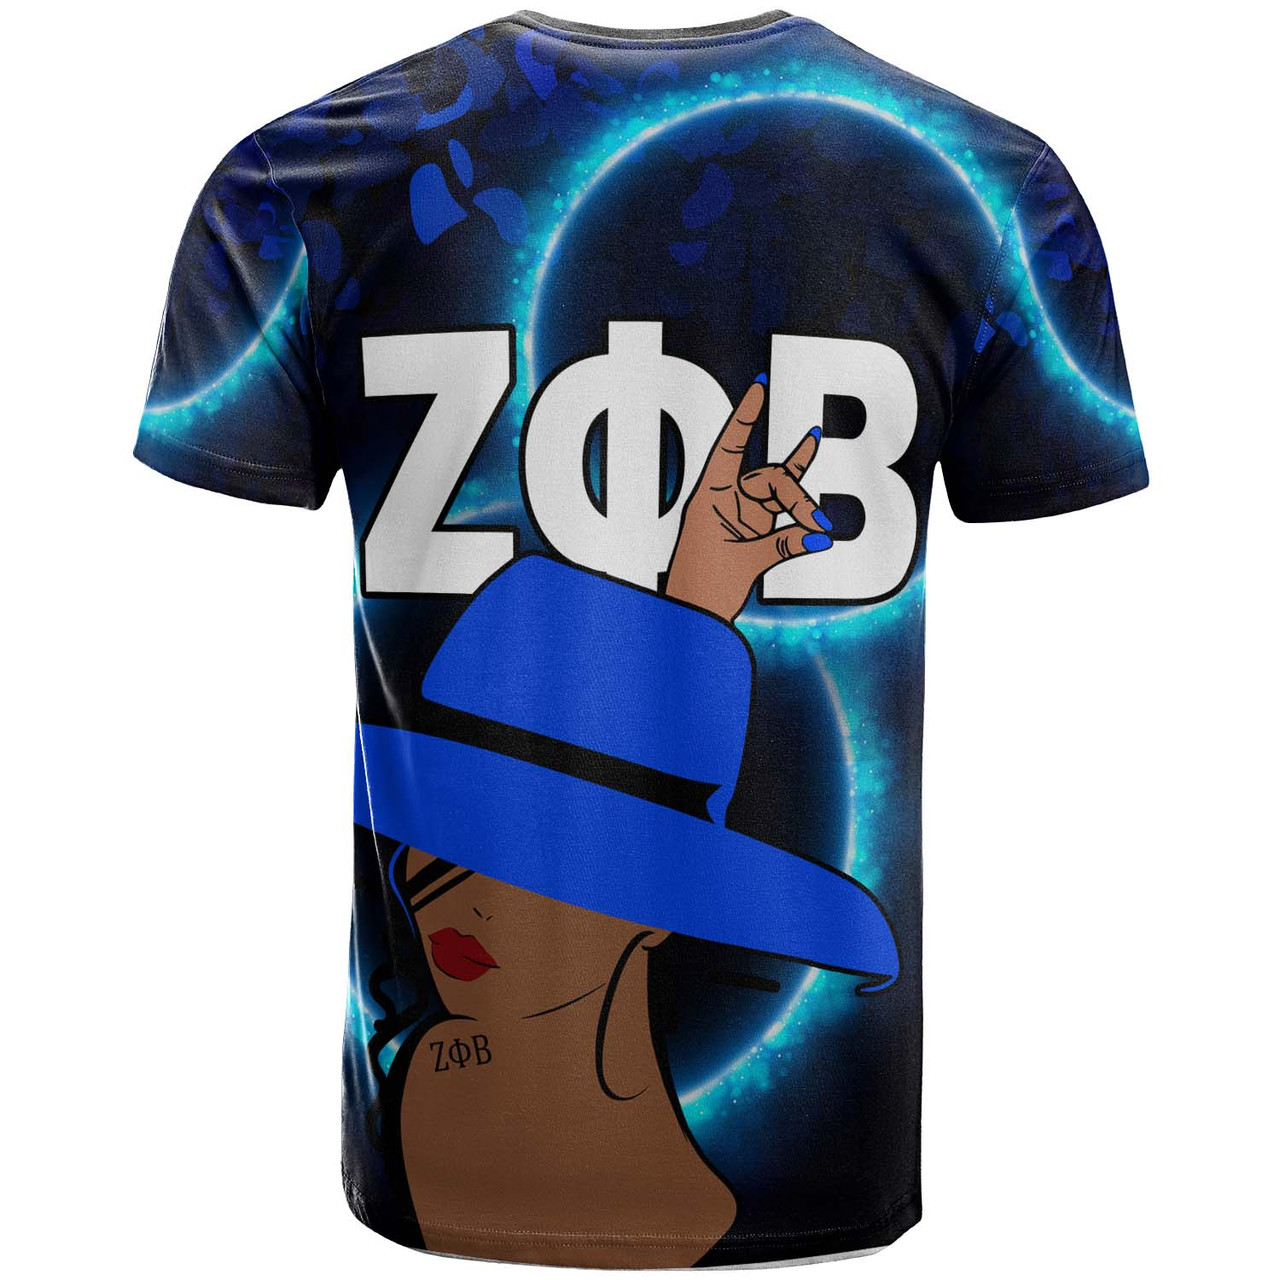 Zeta Phi Beta T-shirt - Sorority Zeta Phi Beta Black Lady Dope Since 1920 T-shirt